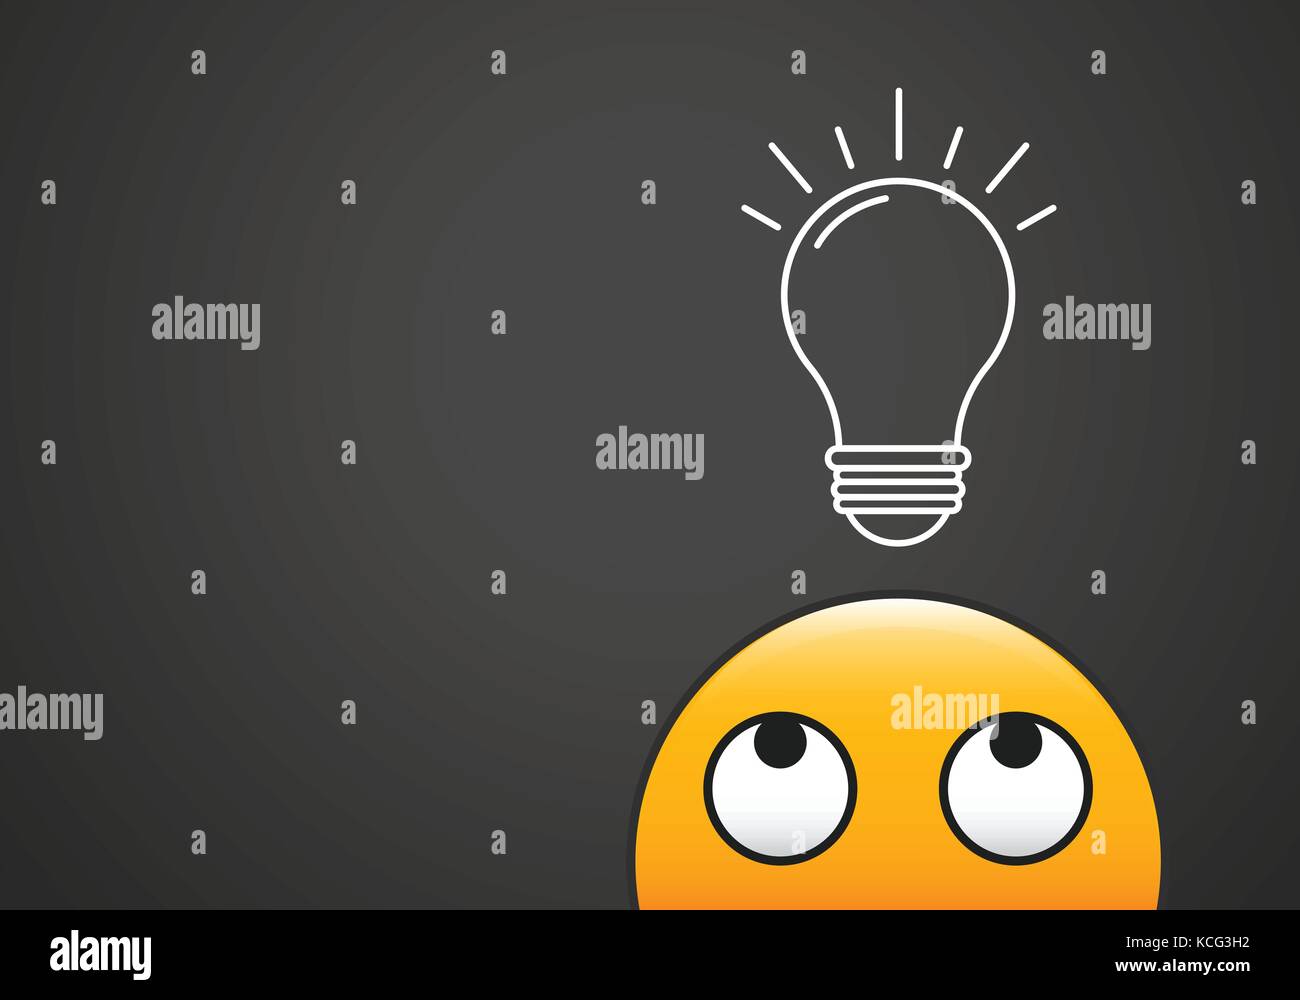 Creative Idea. Light bulb above head concept. Vector illustration with emoticon face. Stock Vector